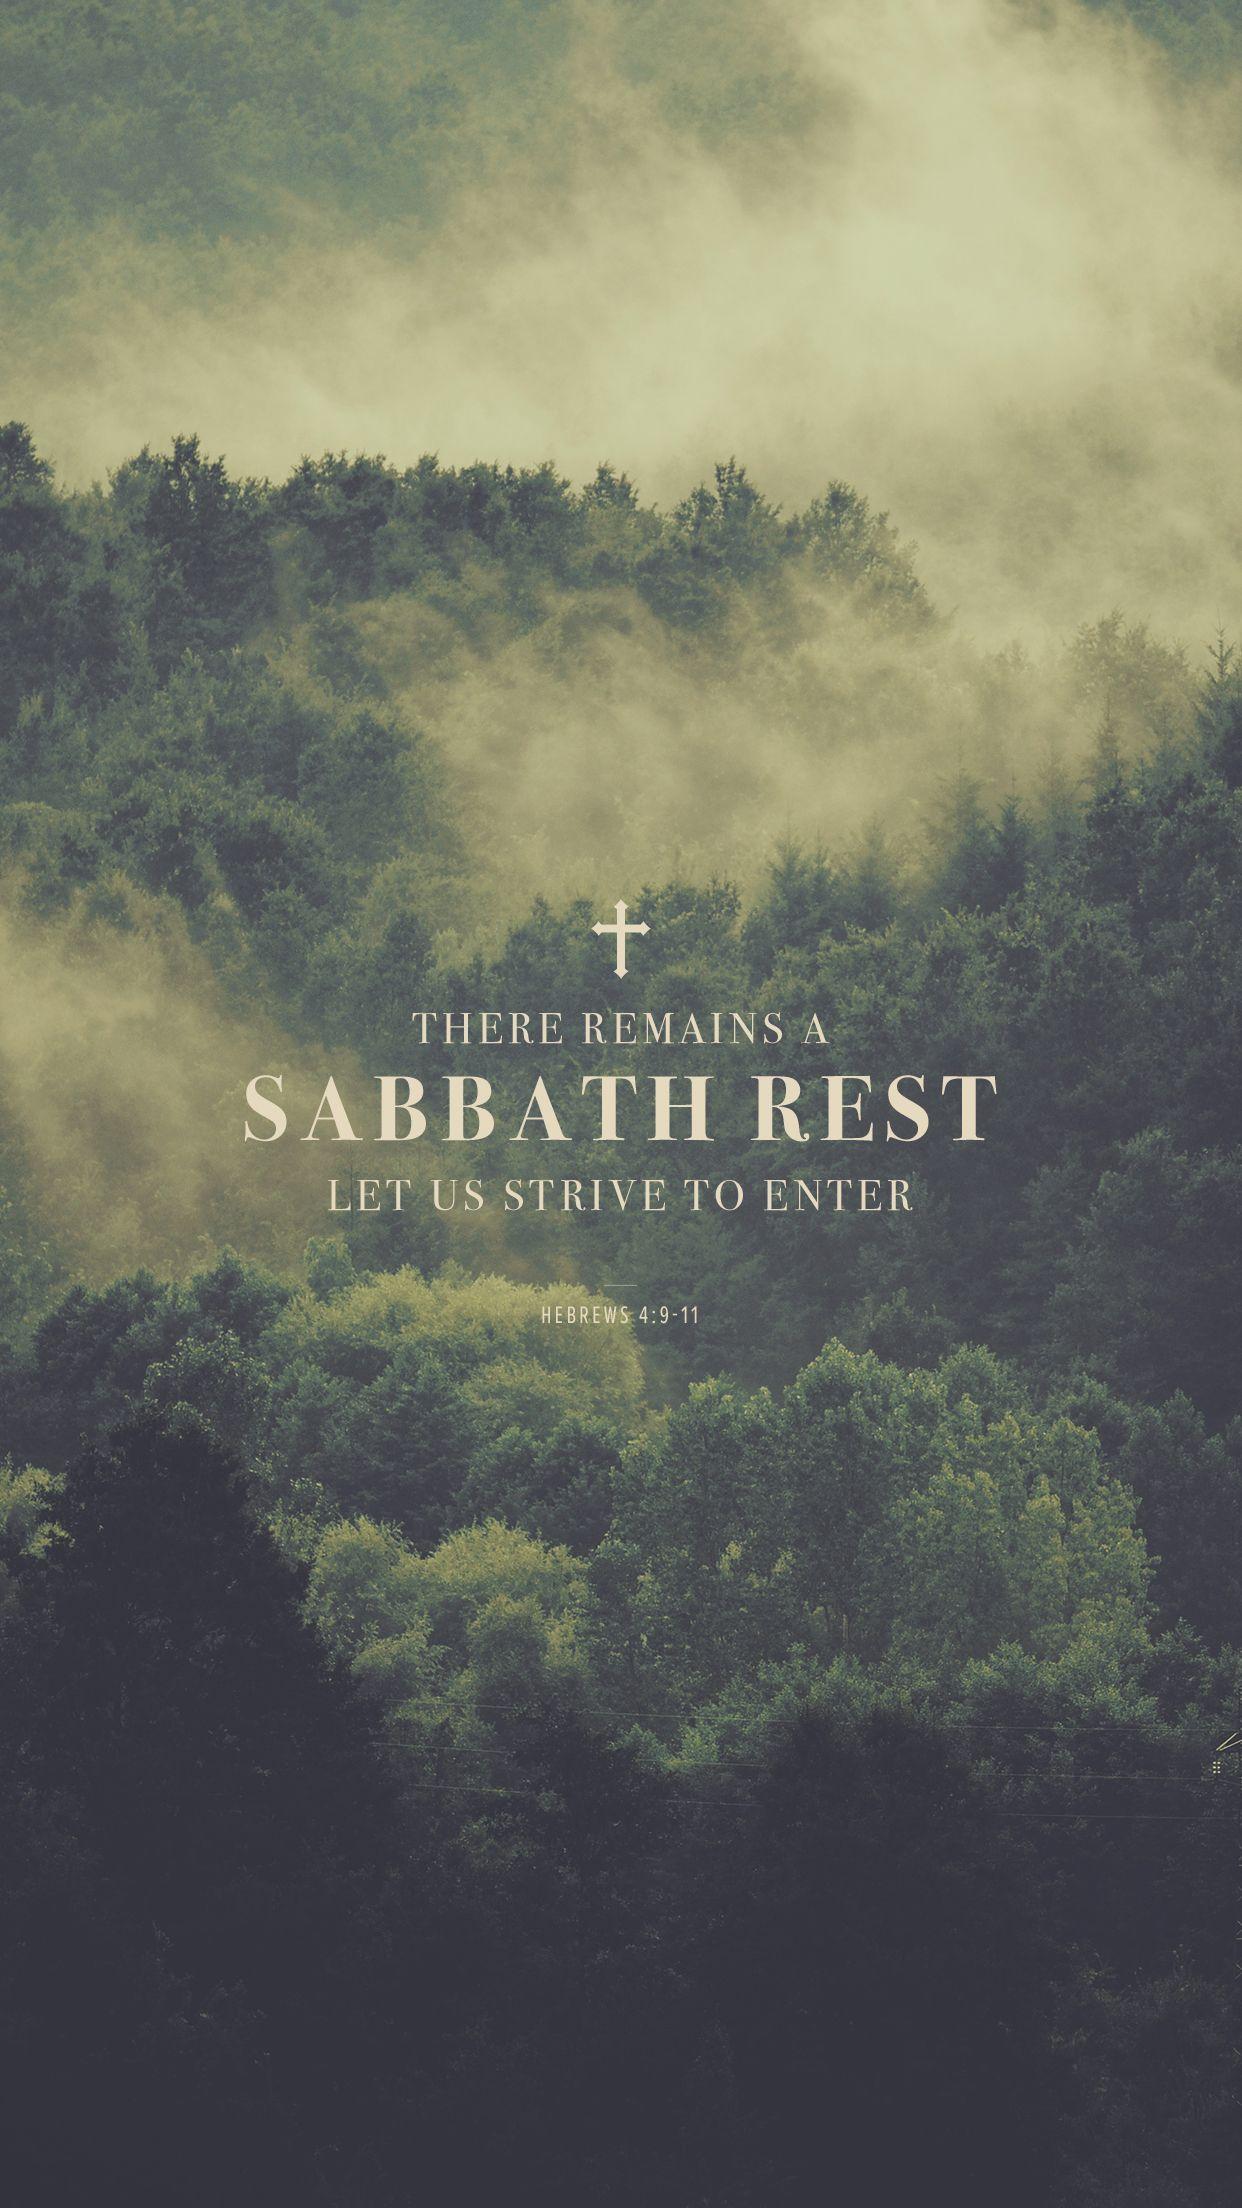 Wednesday Wallpaper: Enter the Sabbath Rest